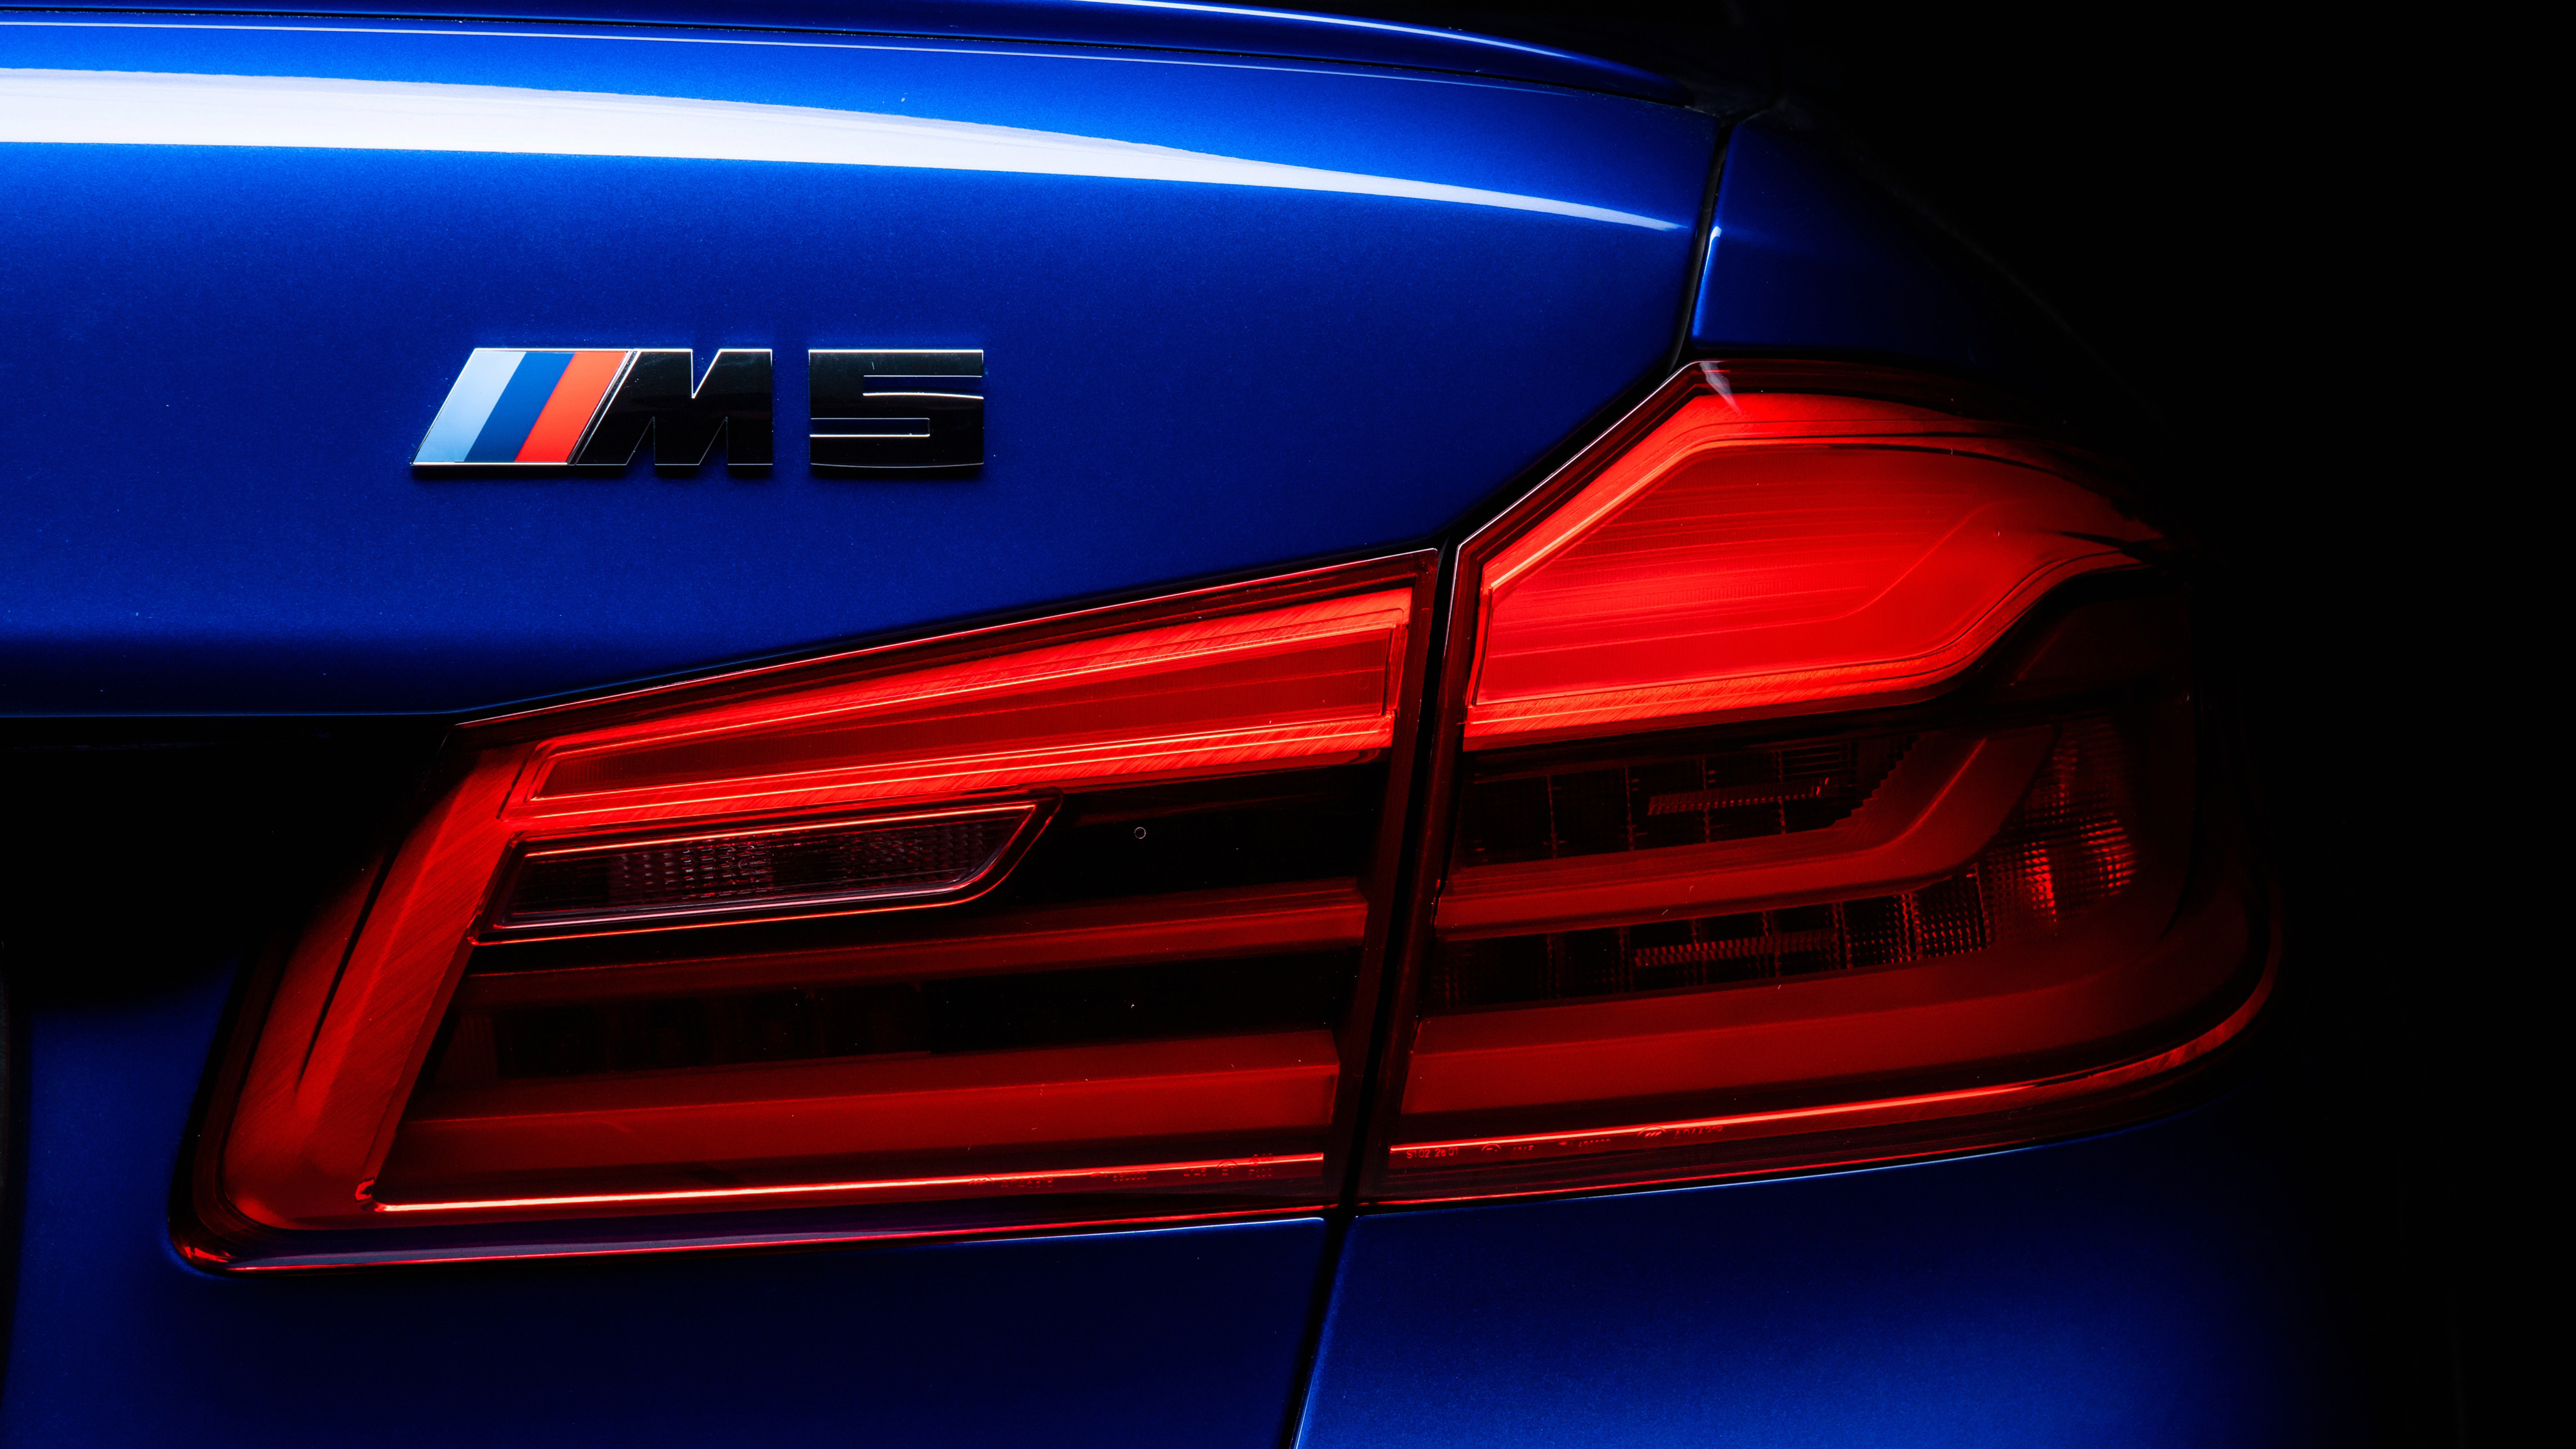 BMW M5 LED Tail Lights 4K Wallpaper | HD Car Wallpapers ...